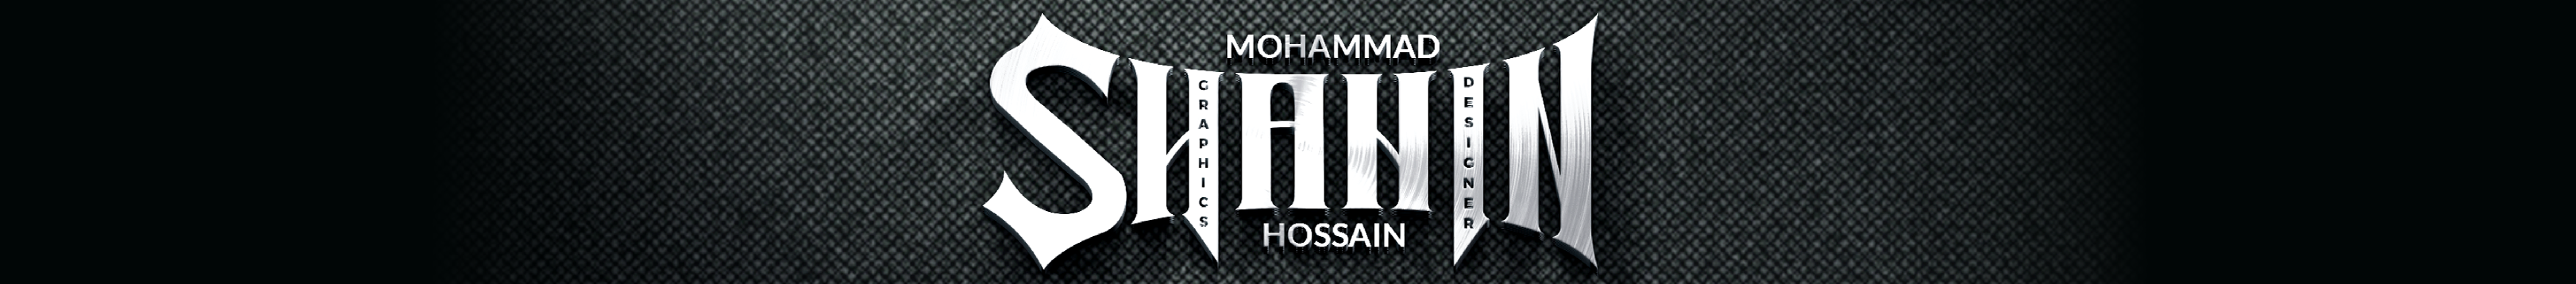 Md Shahin Hossain's profile banner